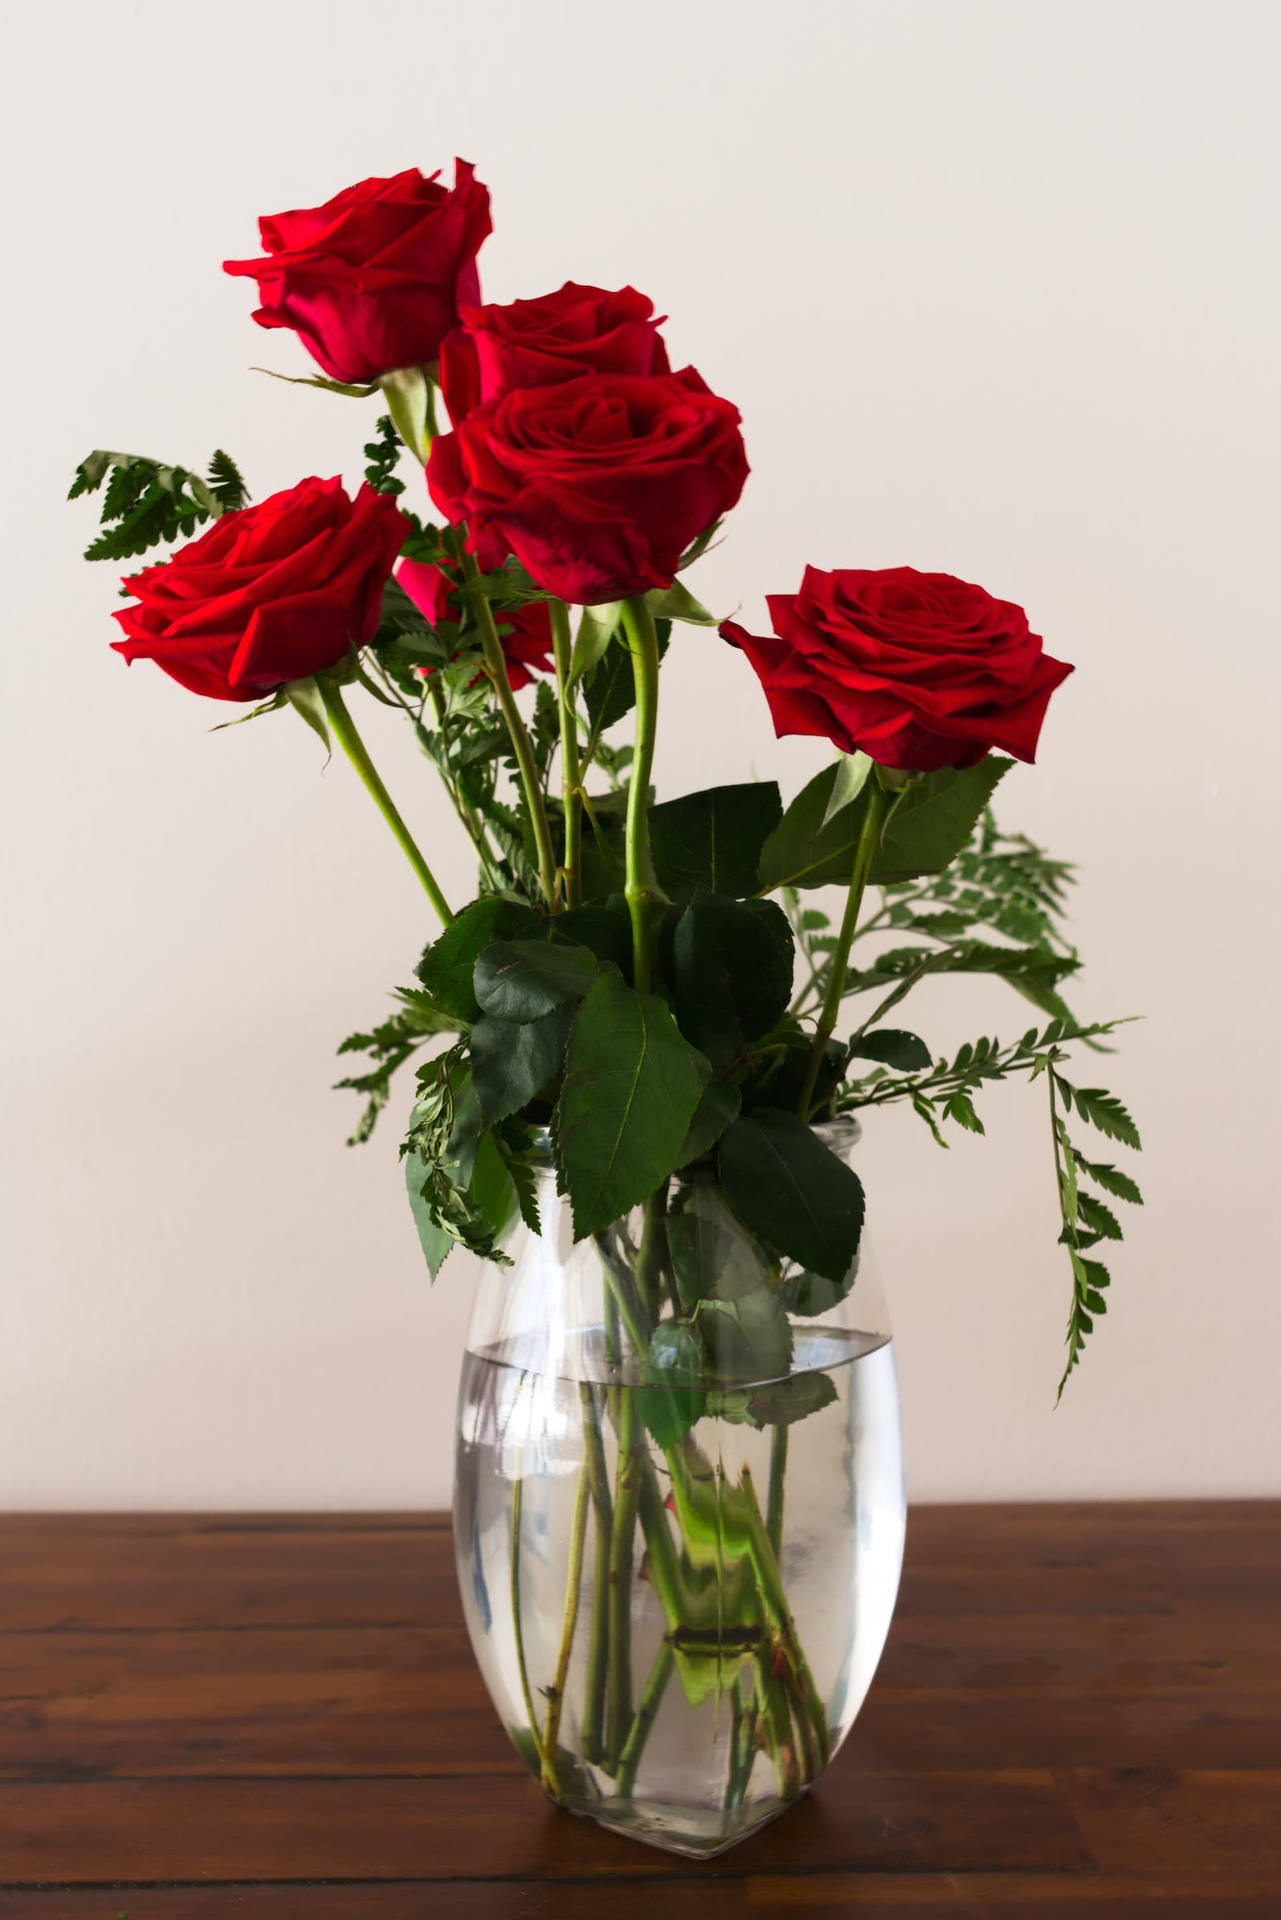 Vase Of Red Rose Flowers Background